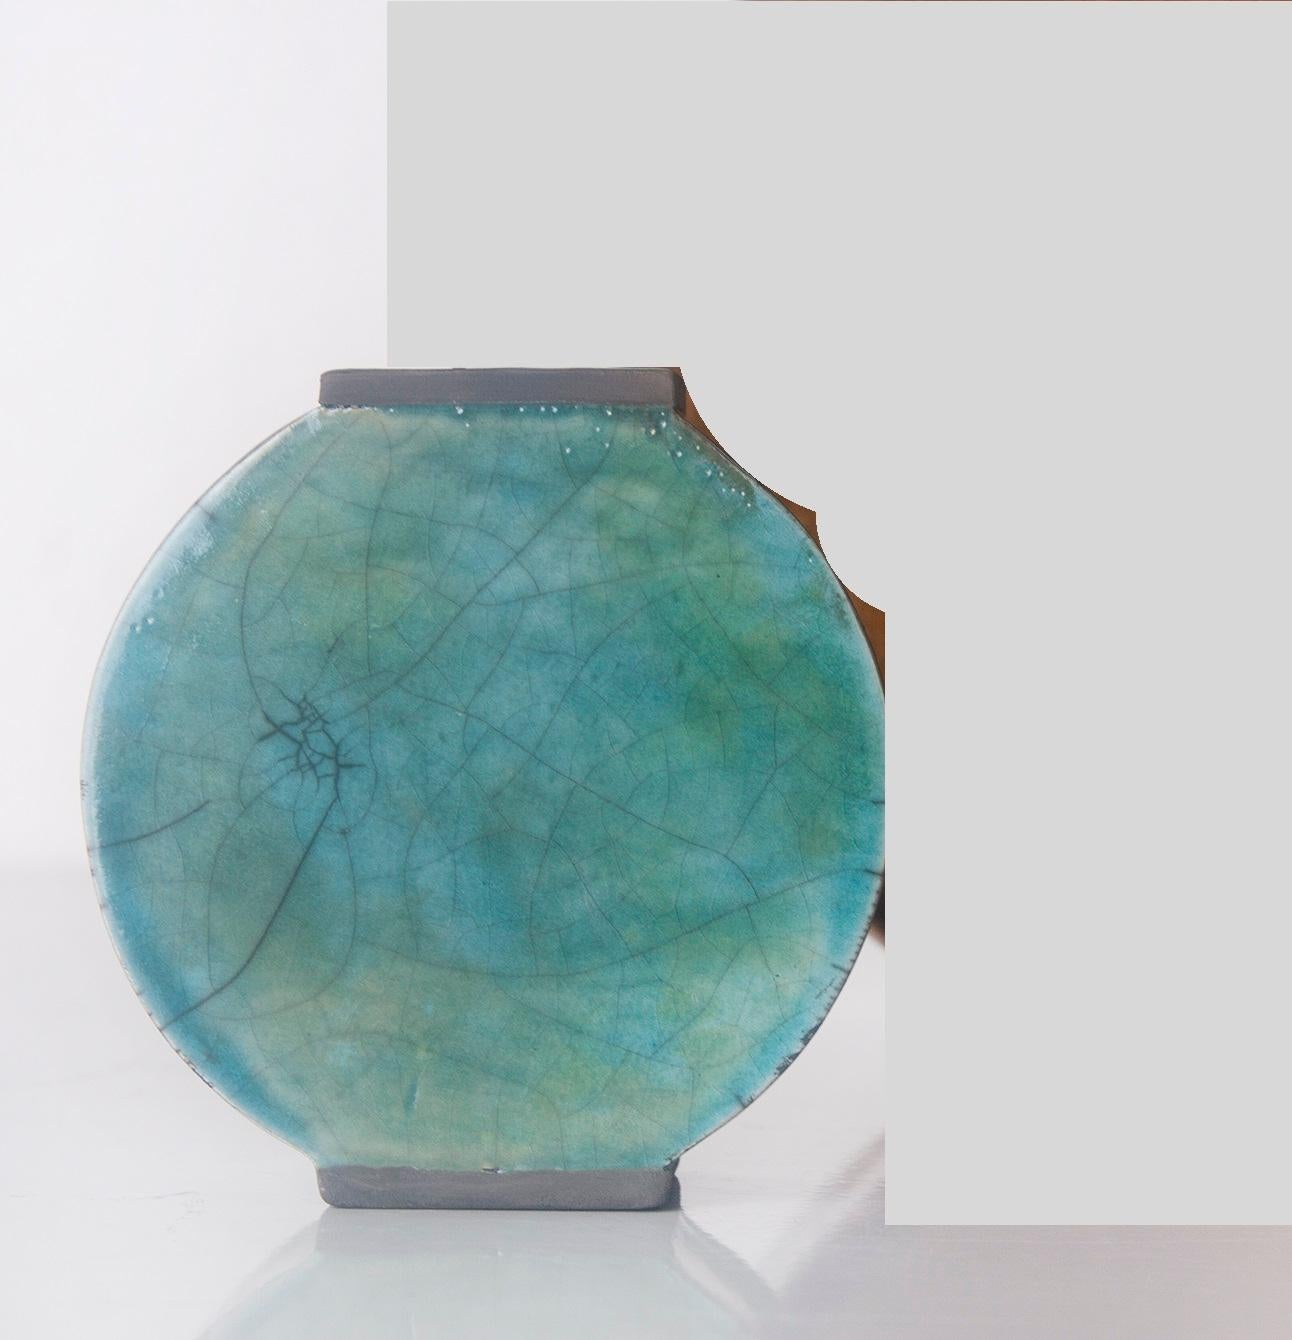 Large Jade vase by Doa Ceramics.
Dimensions: 12